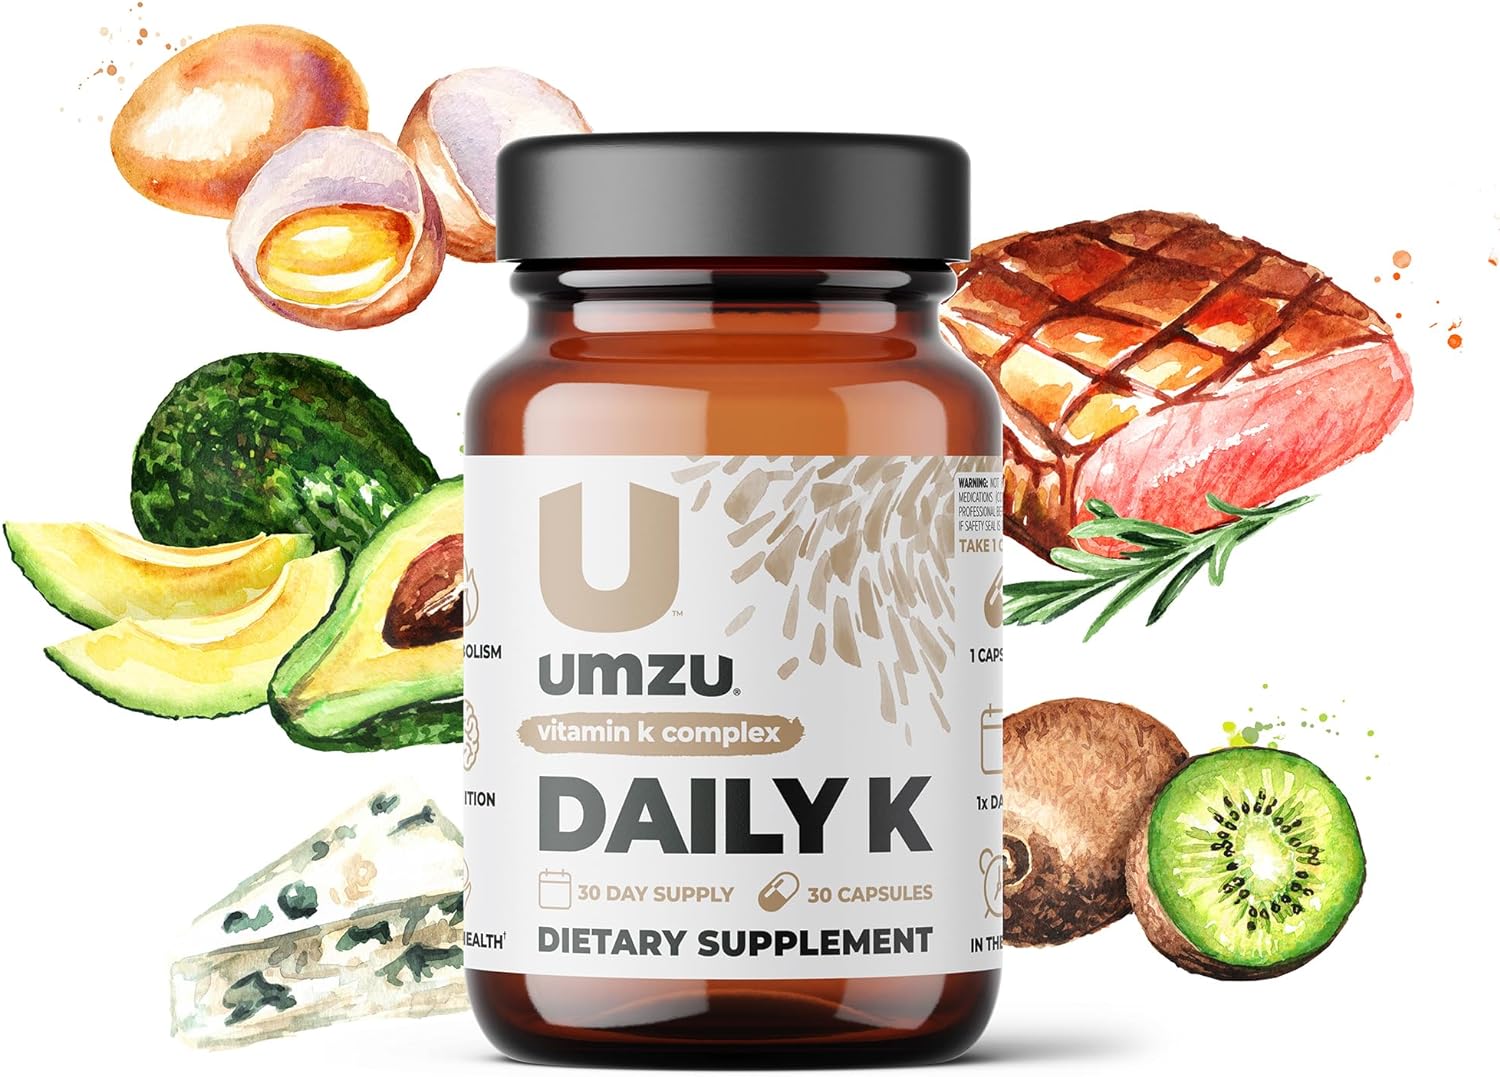 UMZU Daily K - Vitamin K Complex to Support Bone, Cardiovascular, Blood Flow Circulation, and Cognitive Health, Vitamin